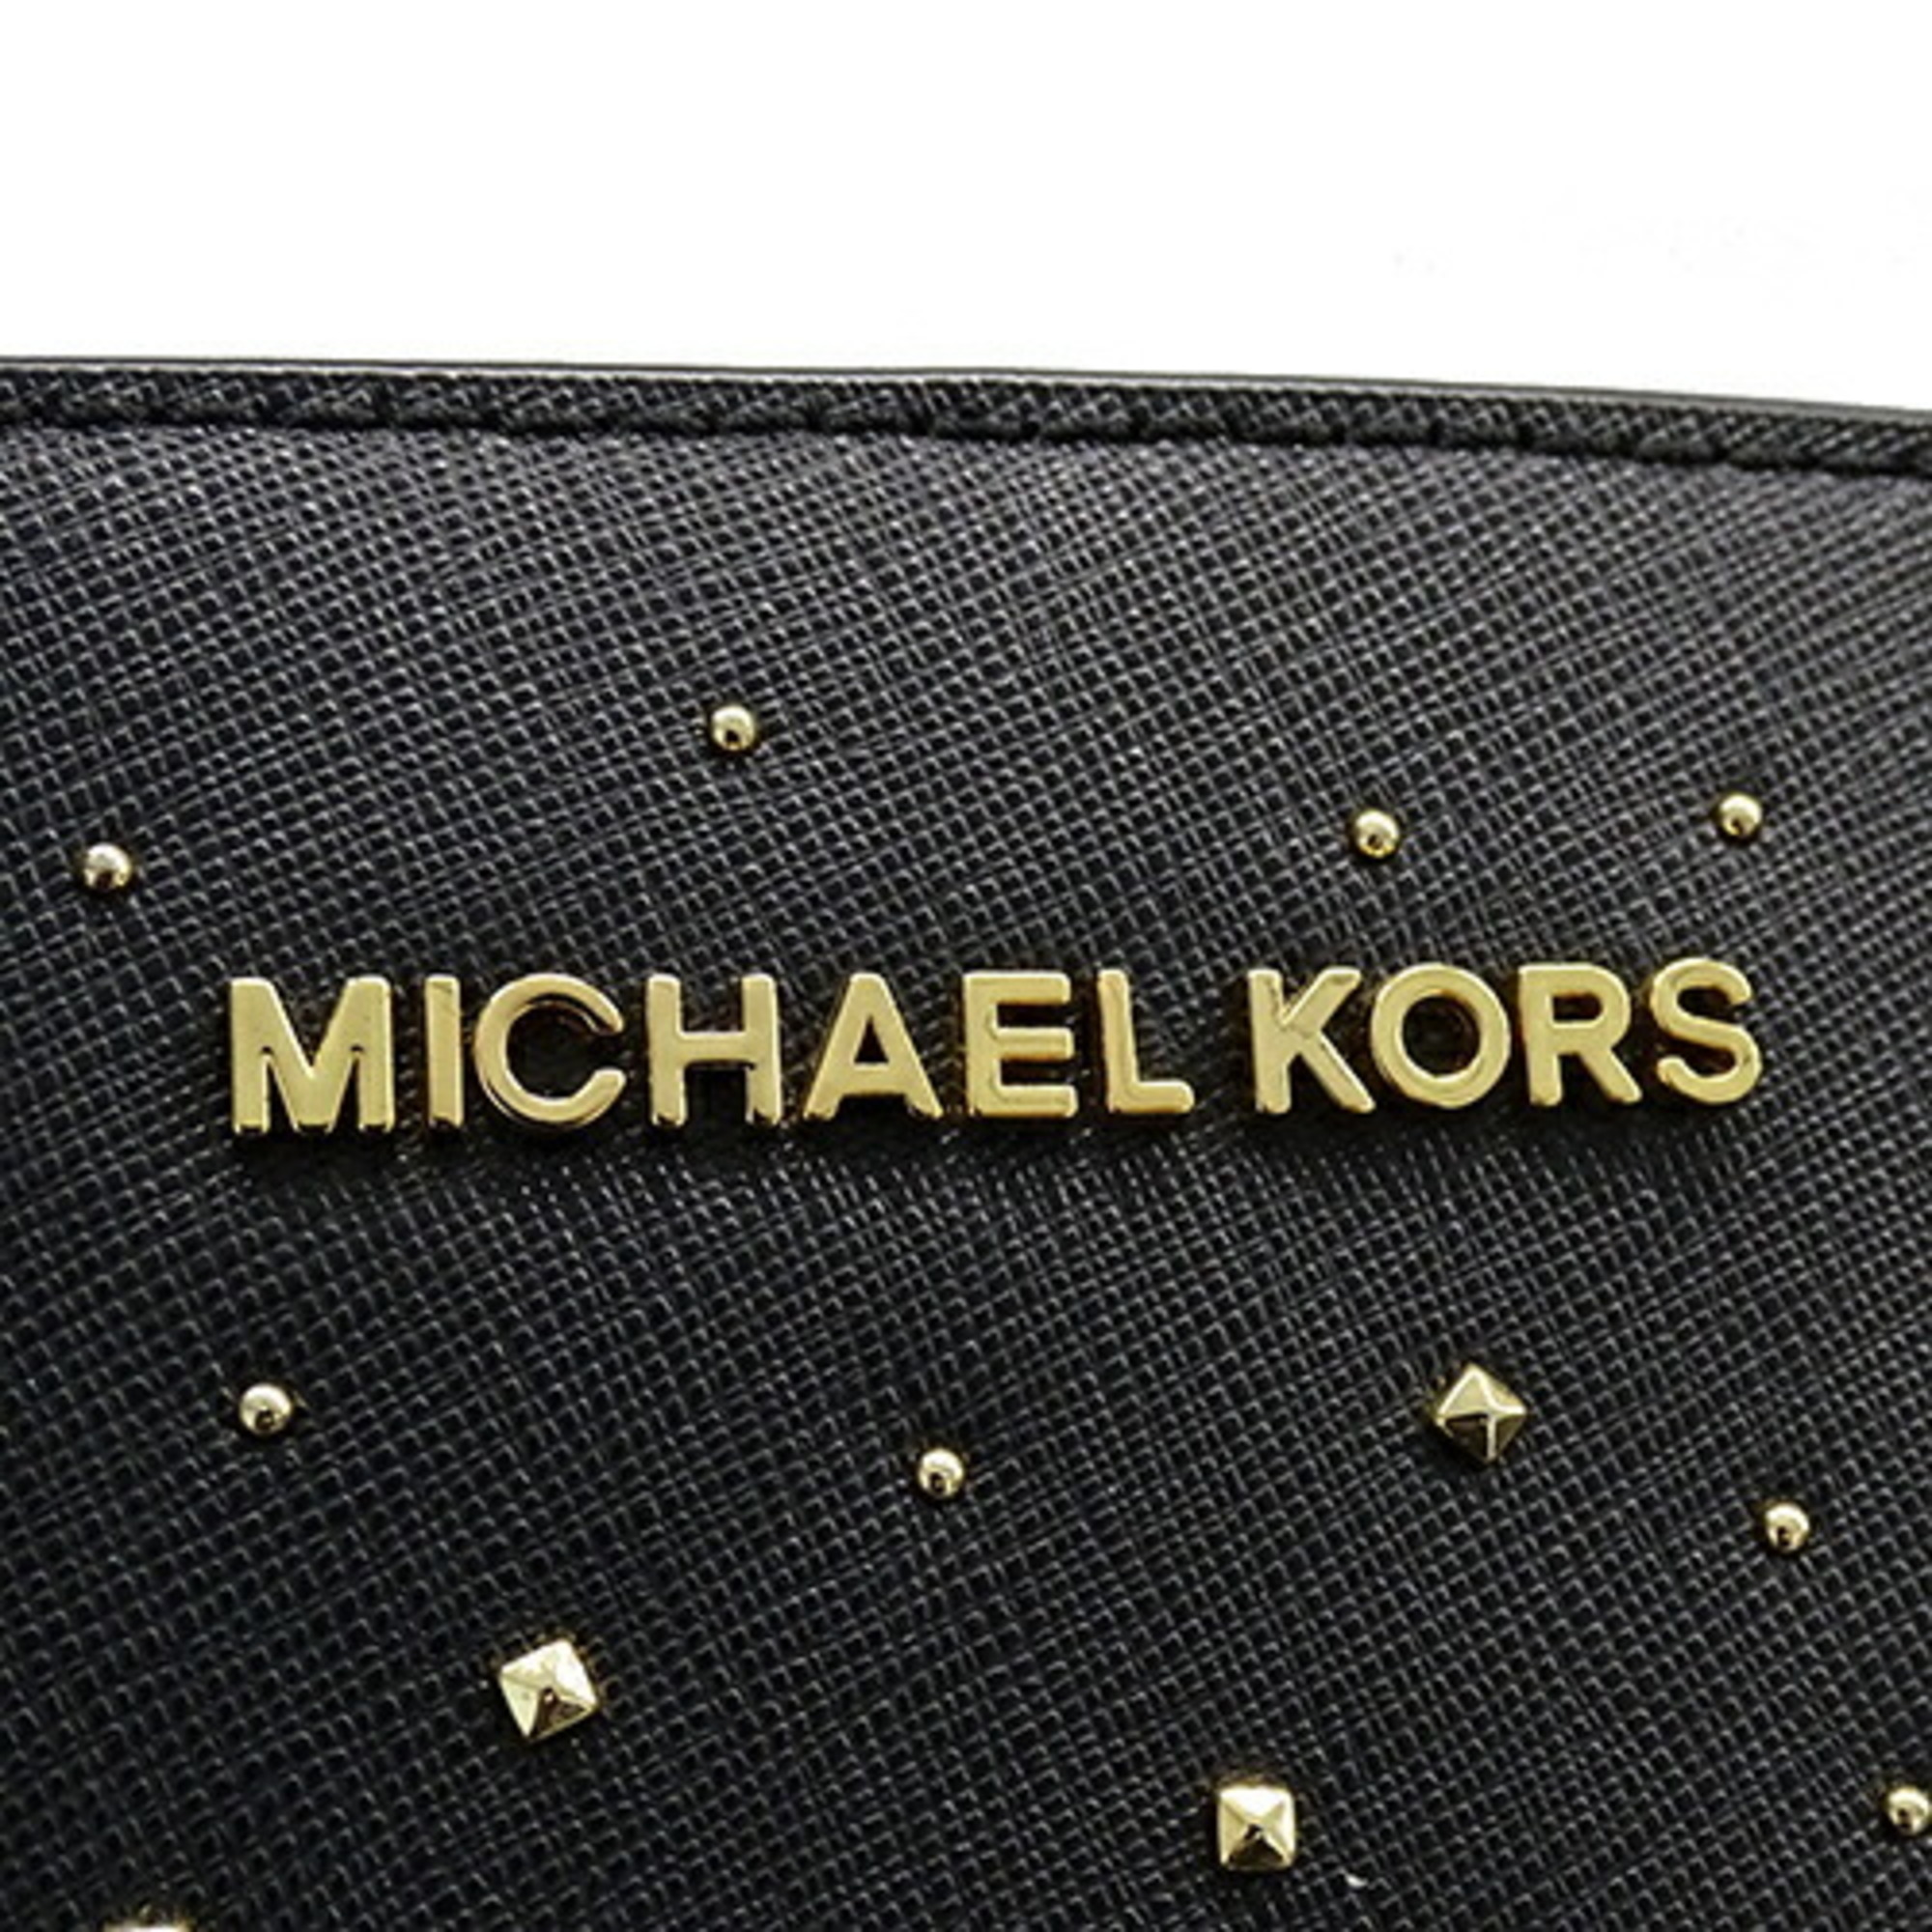 Michael Kors Bags Women's Handbags Shoulder 2way Leather Studs LOVE Black